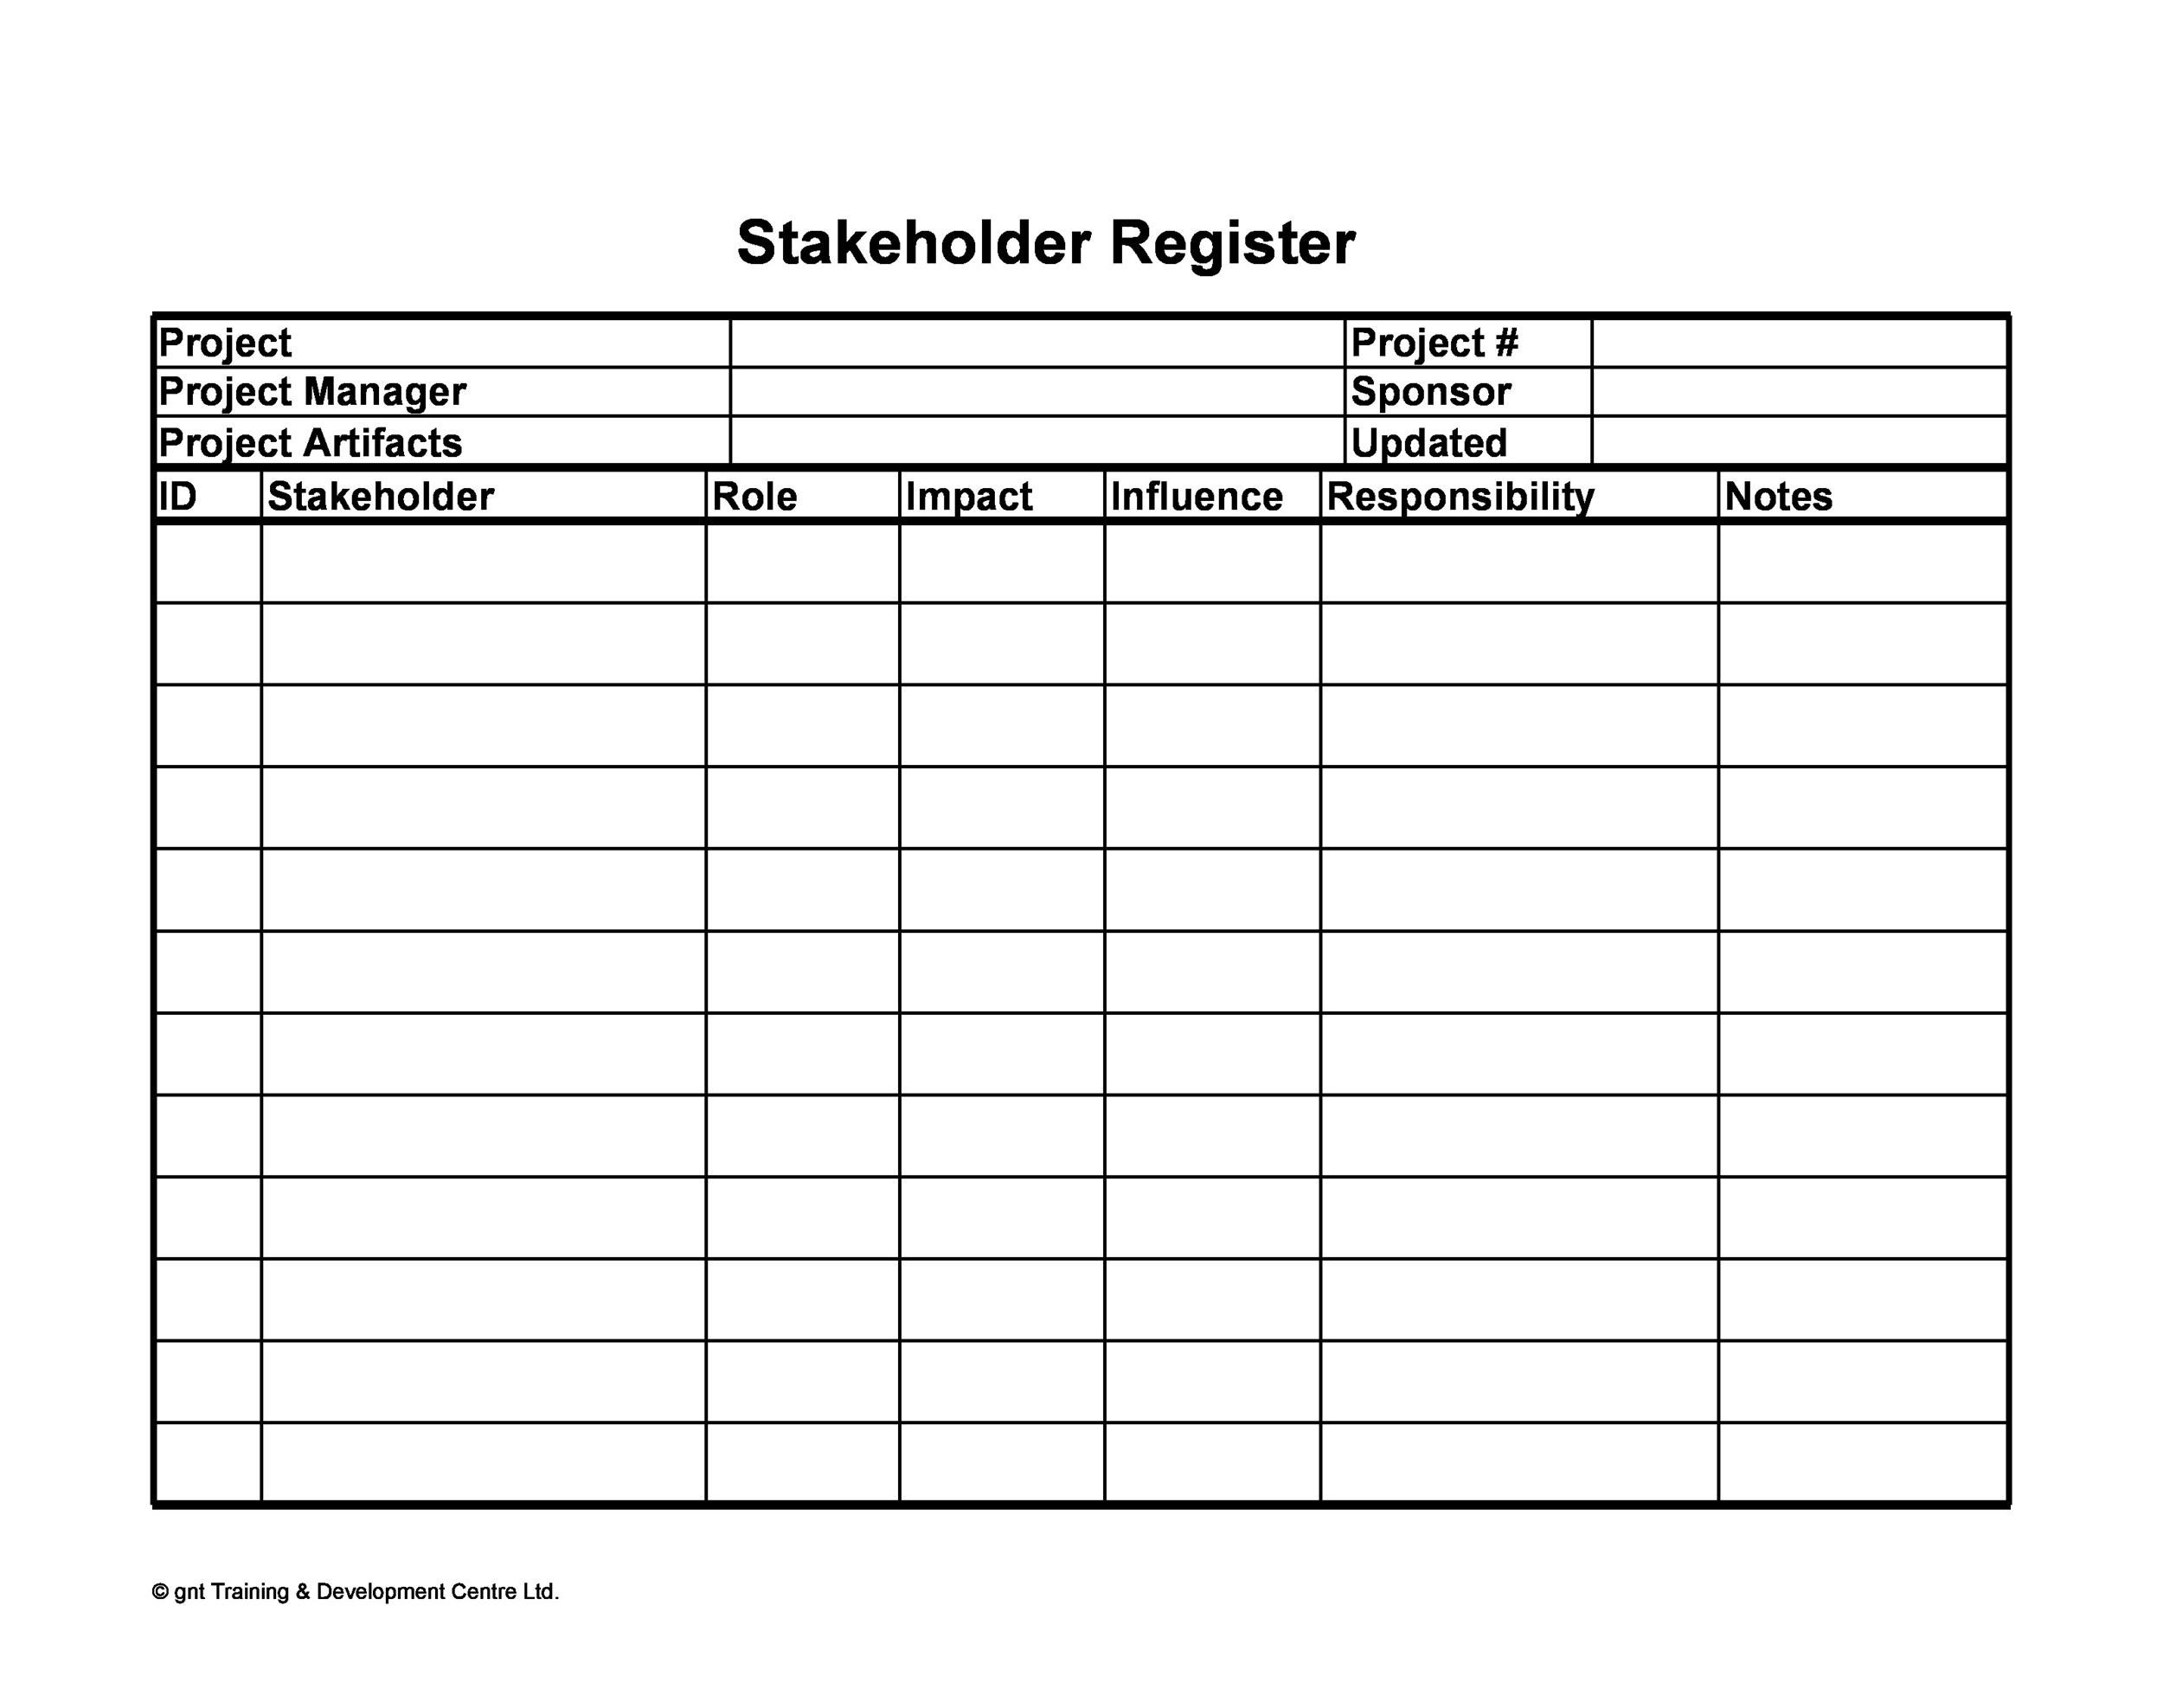 11 Free Stakeholder Analysis Templates (Excel & Word) ᐅ TemplateLab With Stakeholder Analysis Template Project Management With Stakeholder Analysis Template Project Management